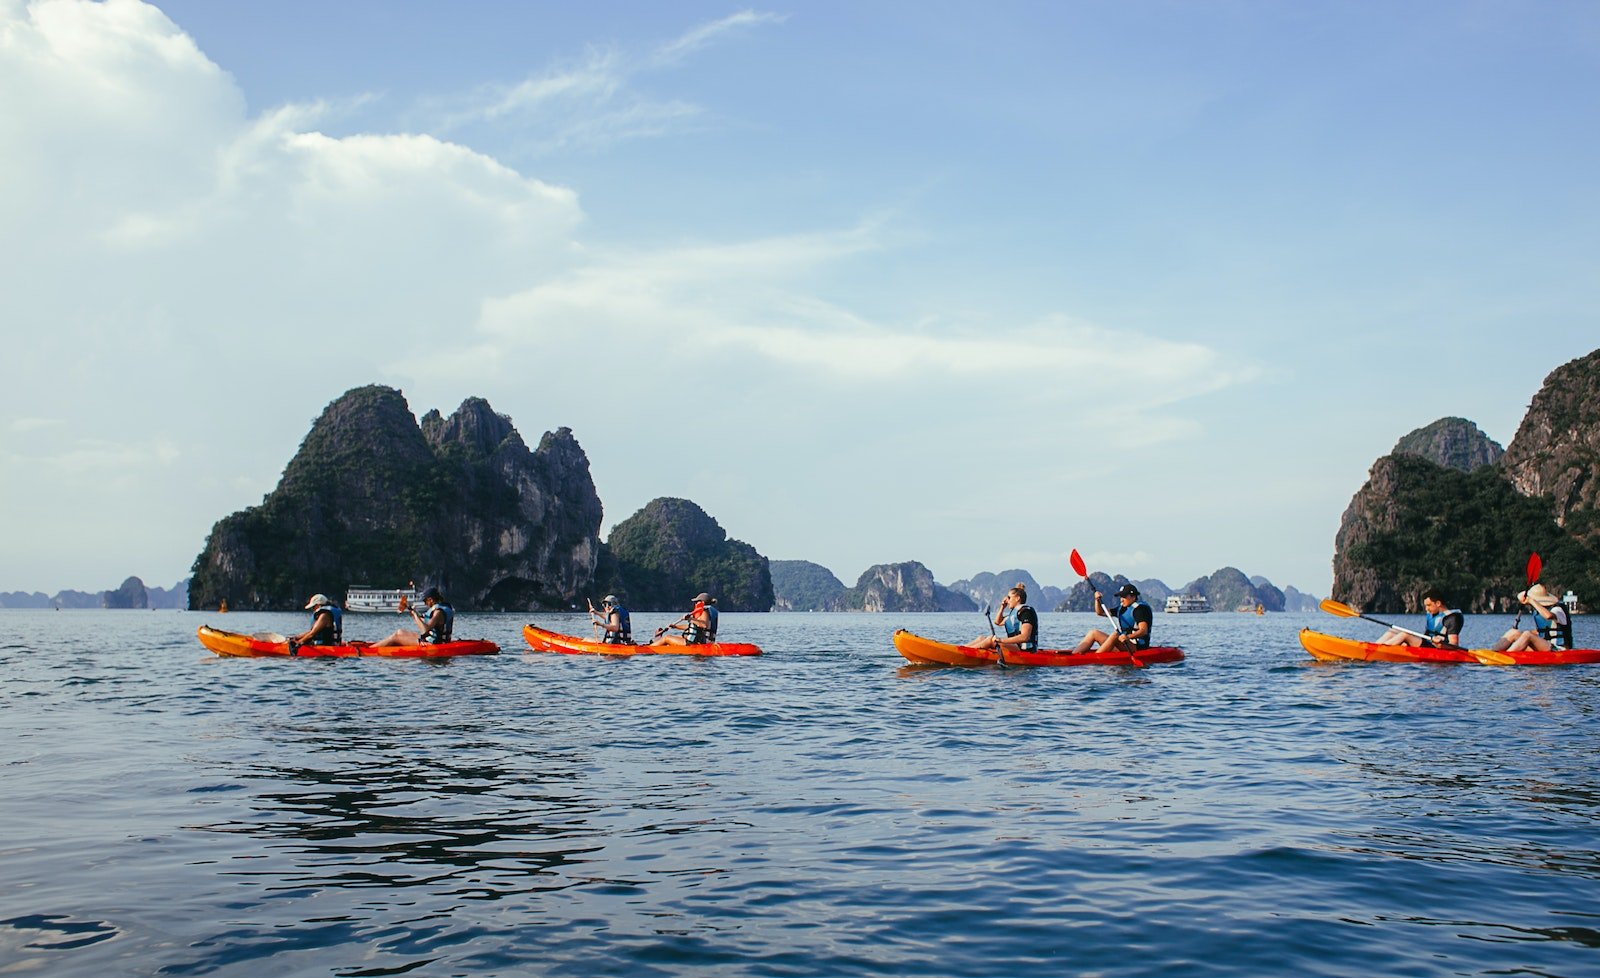 People Kayaking on the Sea